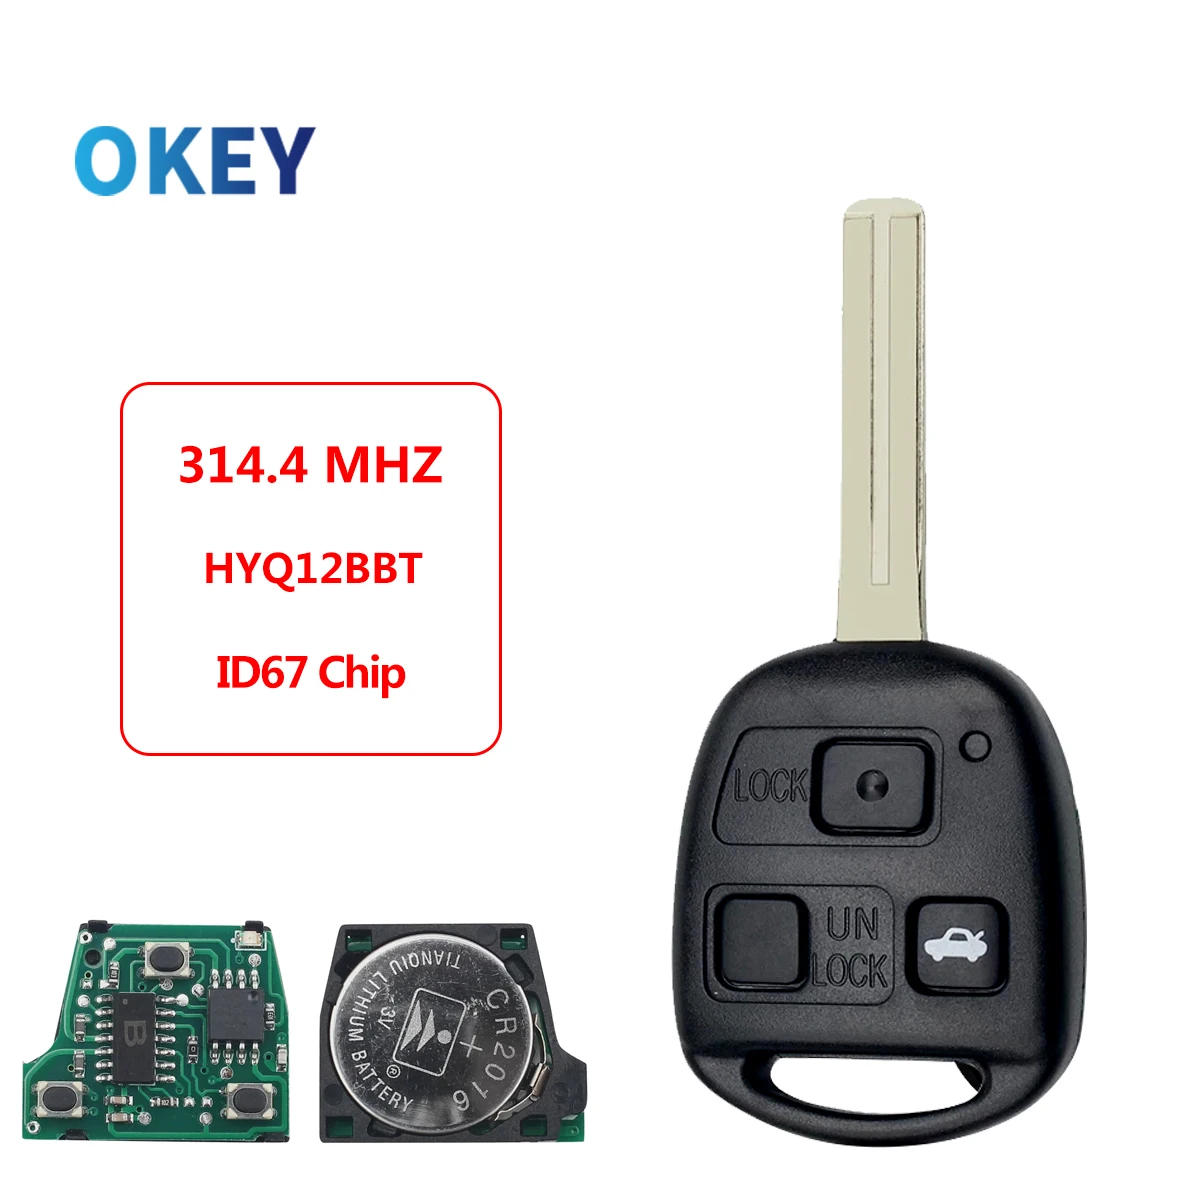 Okey Remote Car Key 314.4 Mhz HYQ12BBT 3 Buttons 4D67 Chip For Lexus RX330 2004-2006 RX350 2007-2009 LS430 ES330 SC430 jingyuqin hyq12bbt remote control car key 4d68 chip 314 4mhz for toyota for lexus rx330 rx350 rx400h rx450h 3 buttons fob